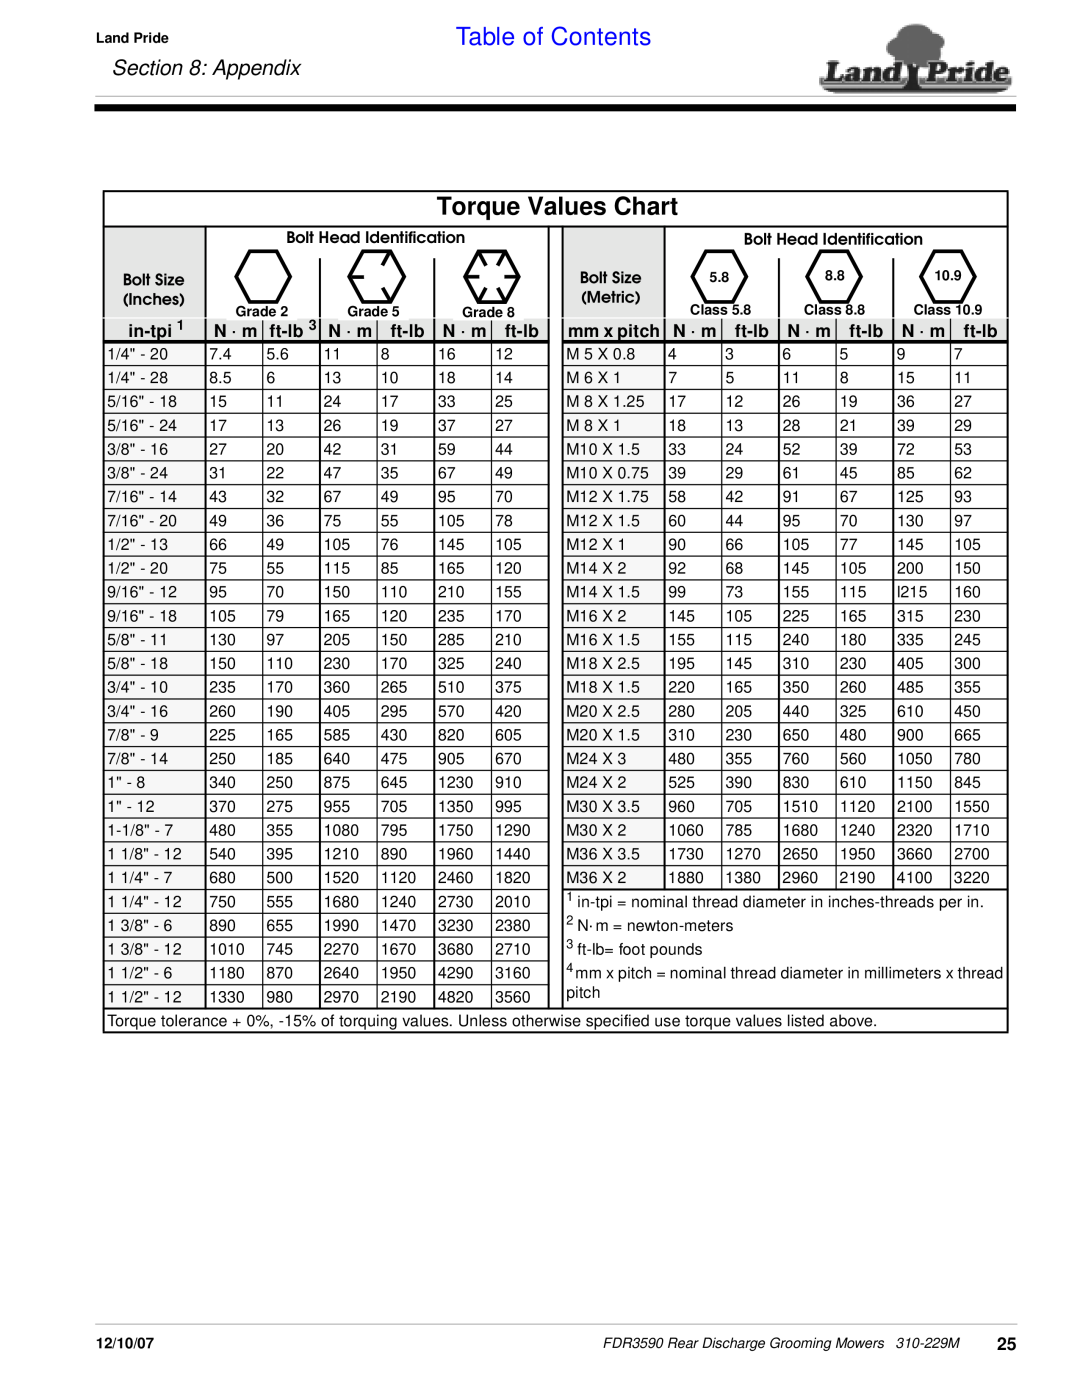 Land Pride FDR3590 manual Torque Values Chart, Appendix, Table of Contents 